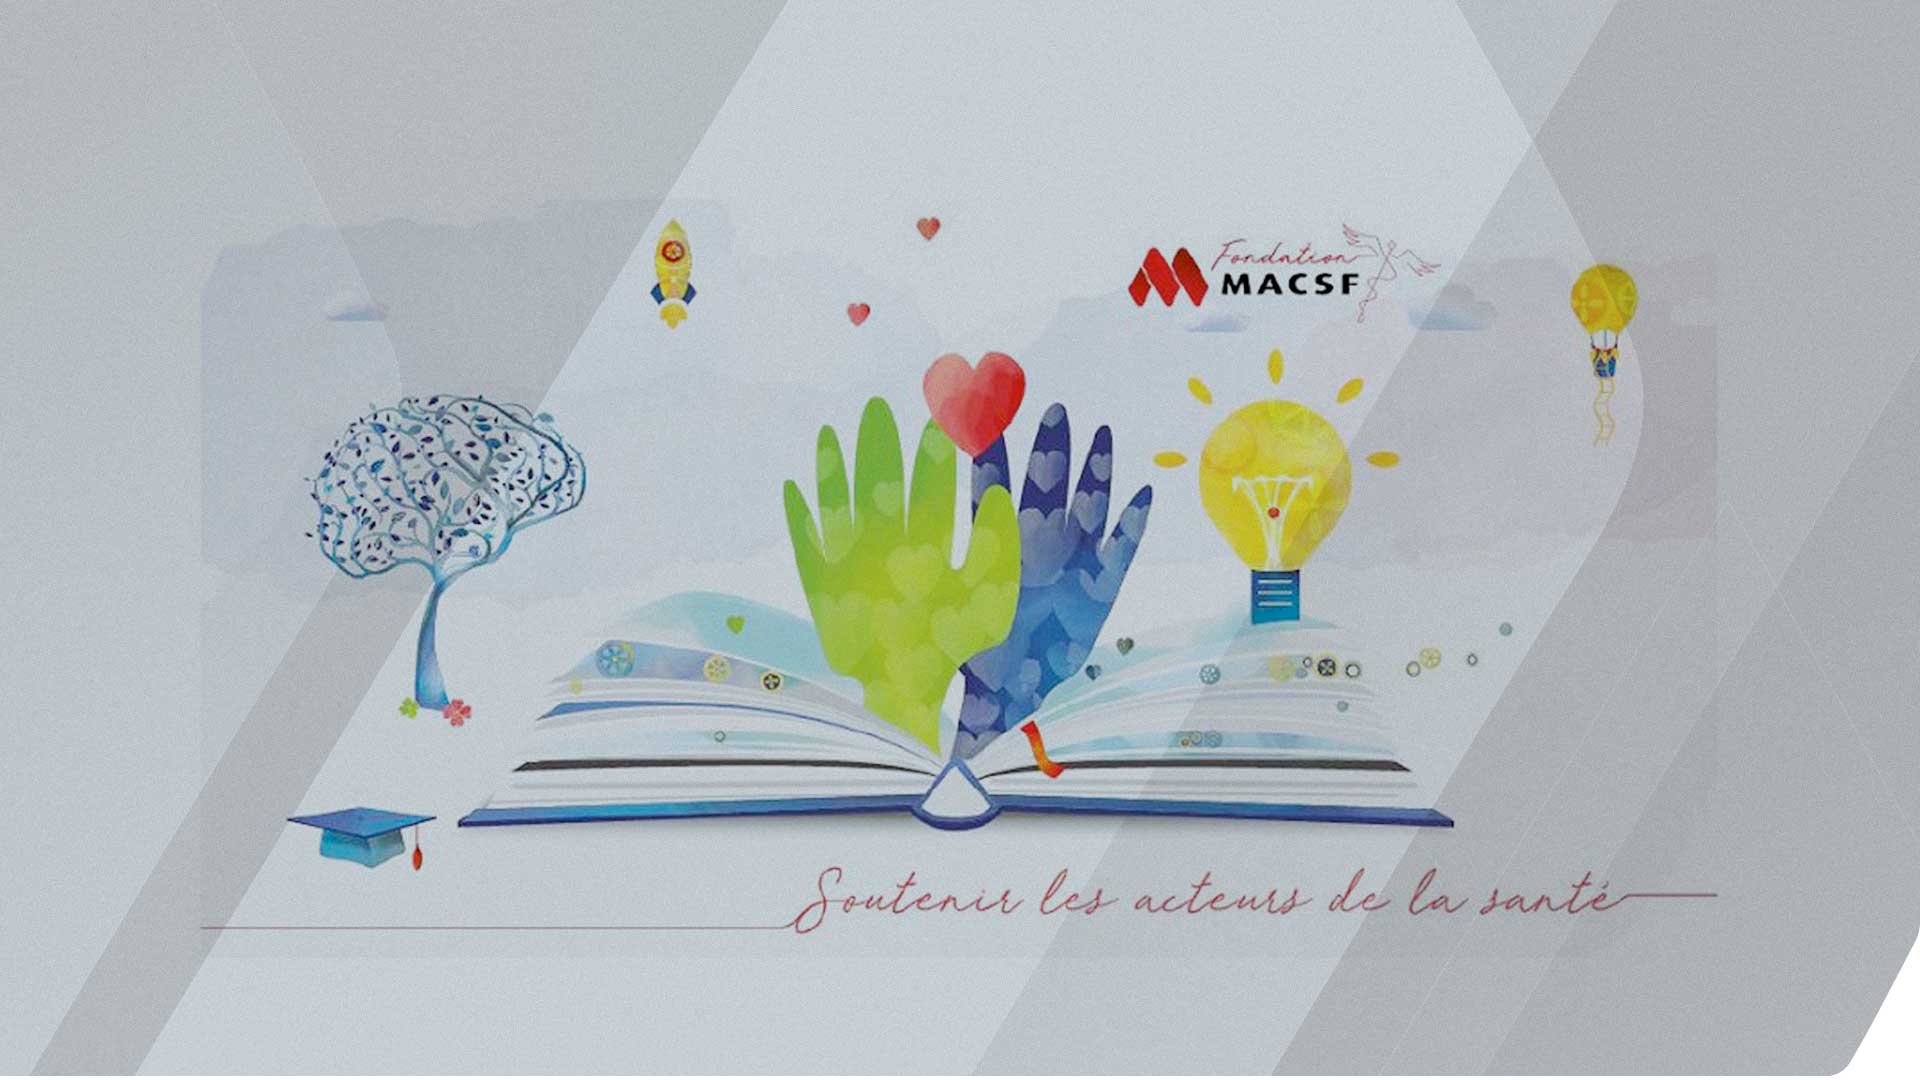 2004 - Création de la fondation MACSF